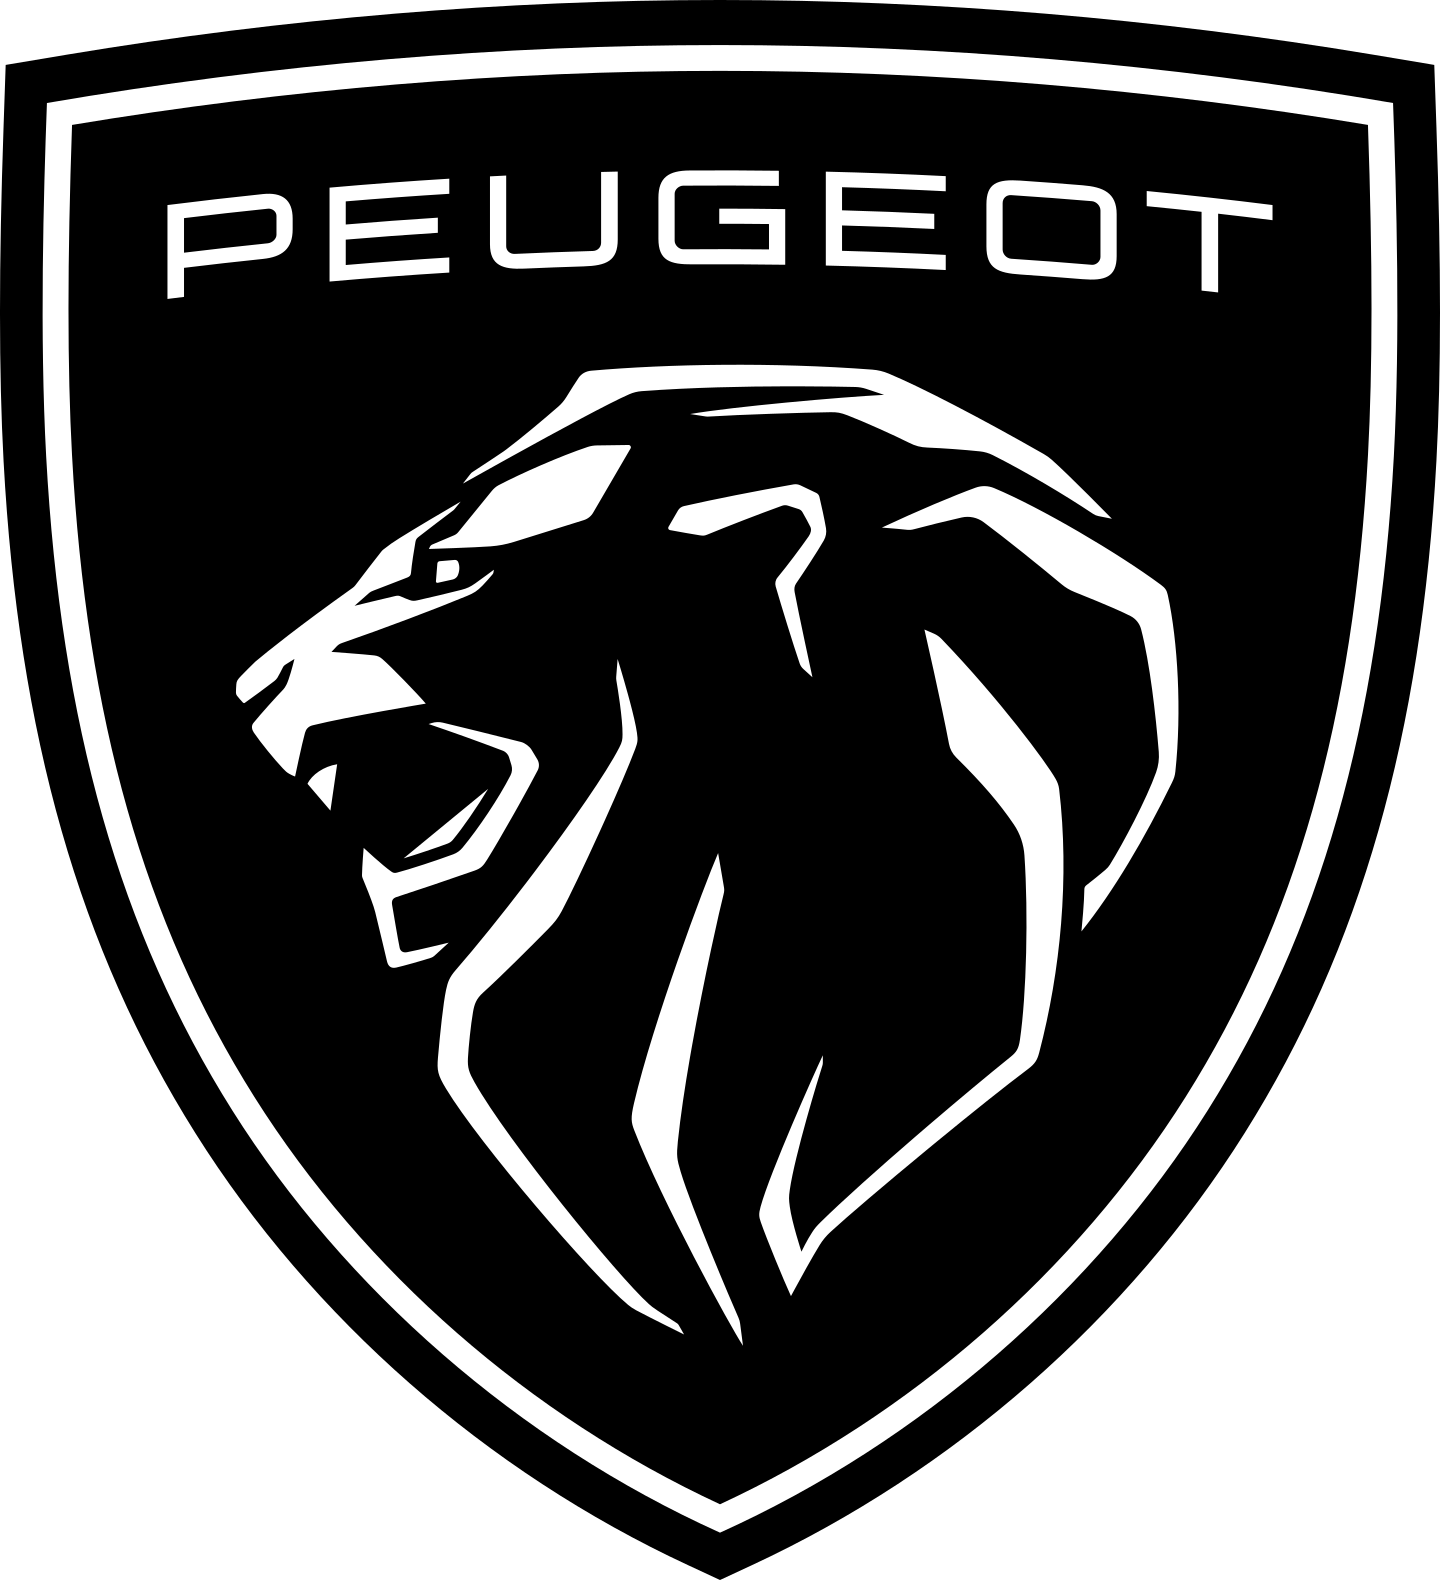 peugeot-logo-2-1